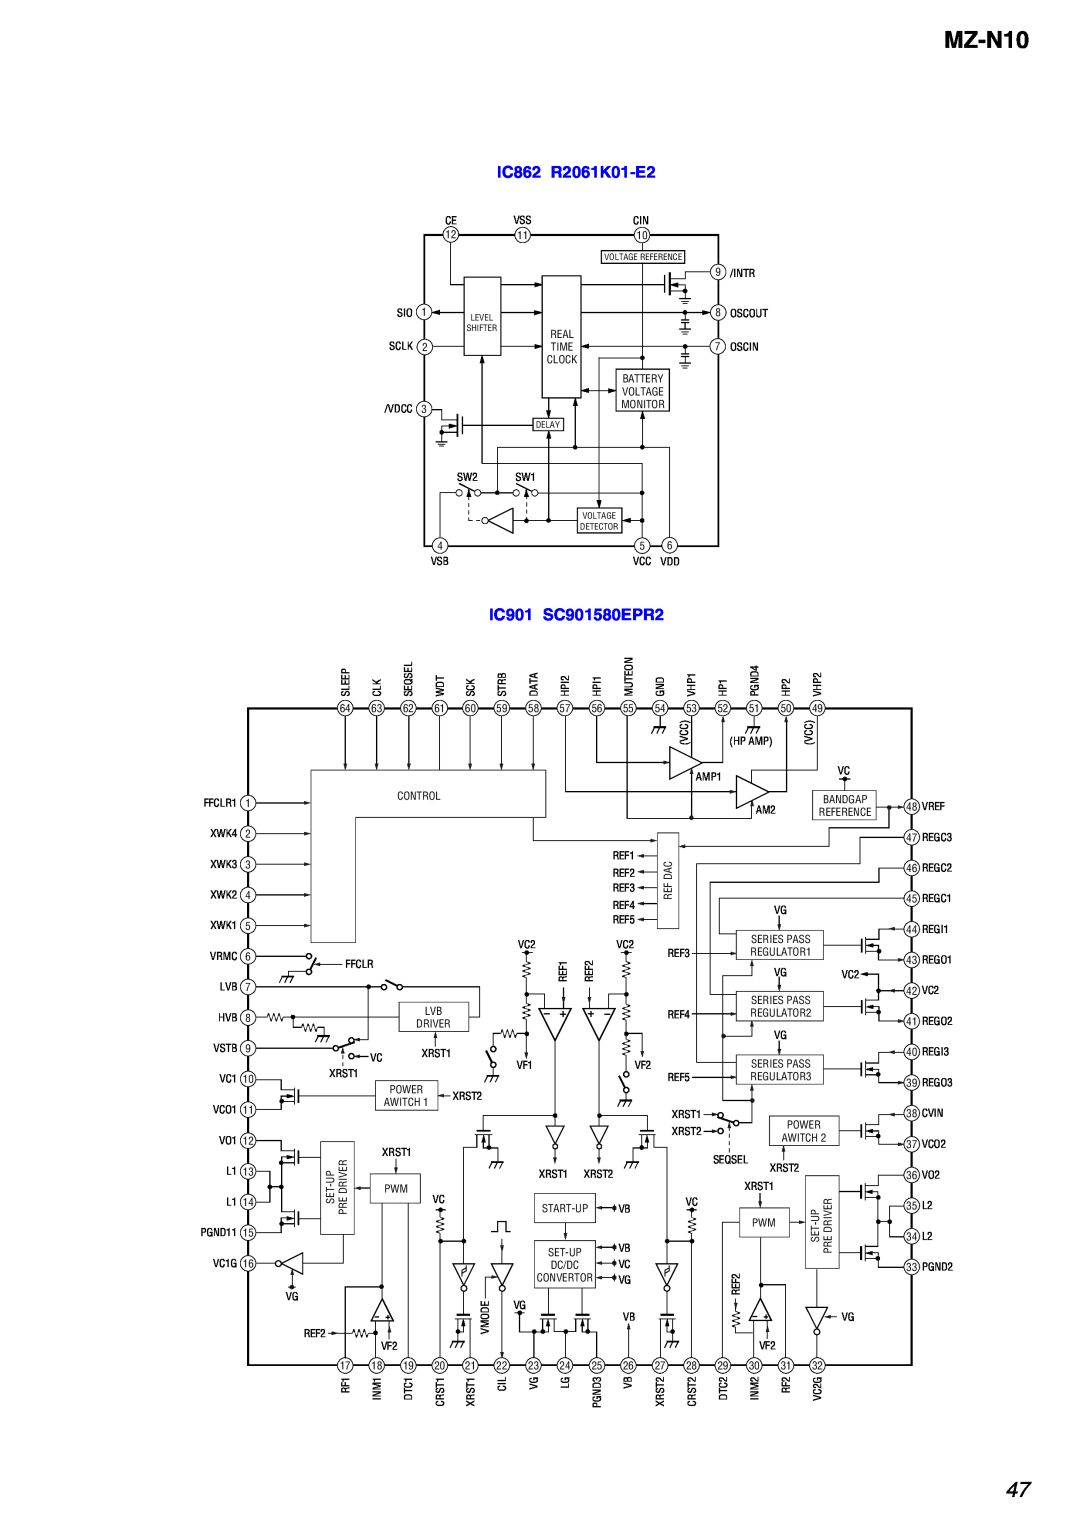 Sony MZ-N10 service manual IC862 R2061K01-E2, IC901 SC901580EPR2 